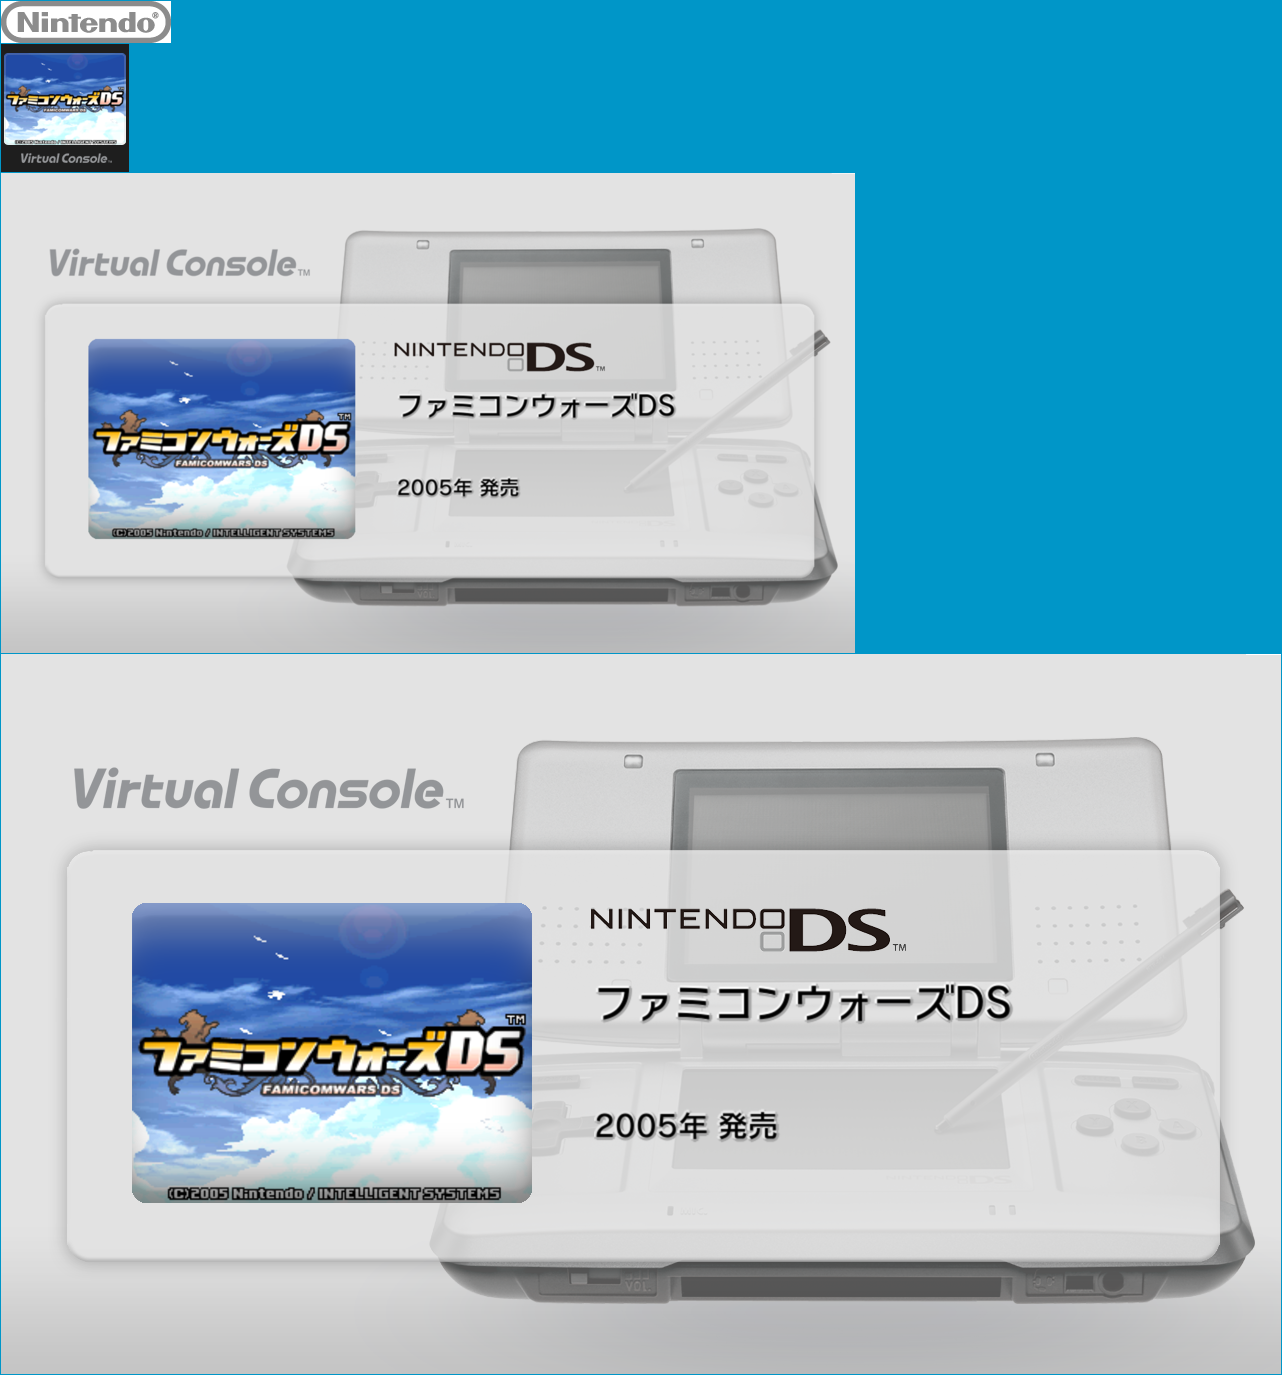 Famicom Wars DS